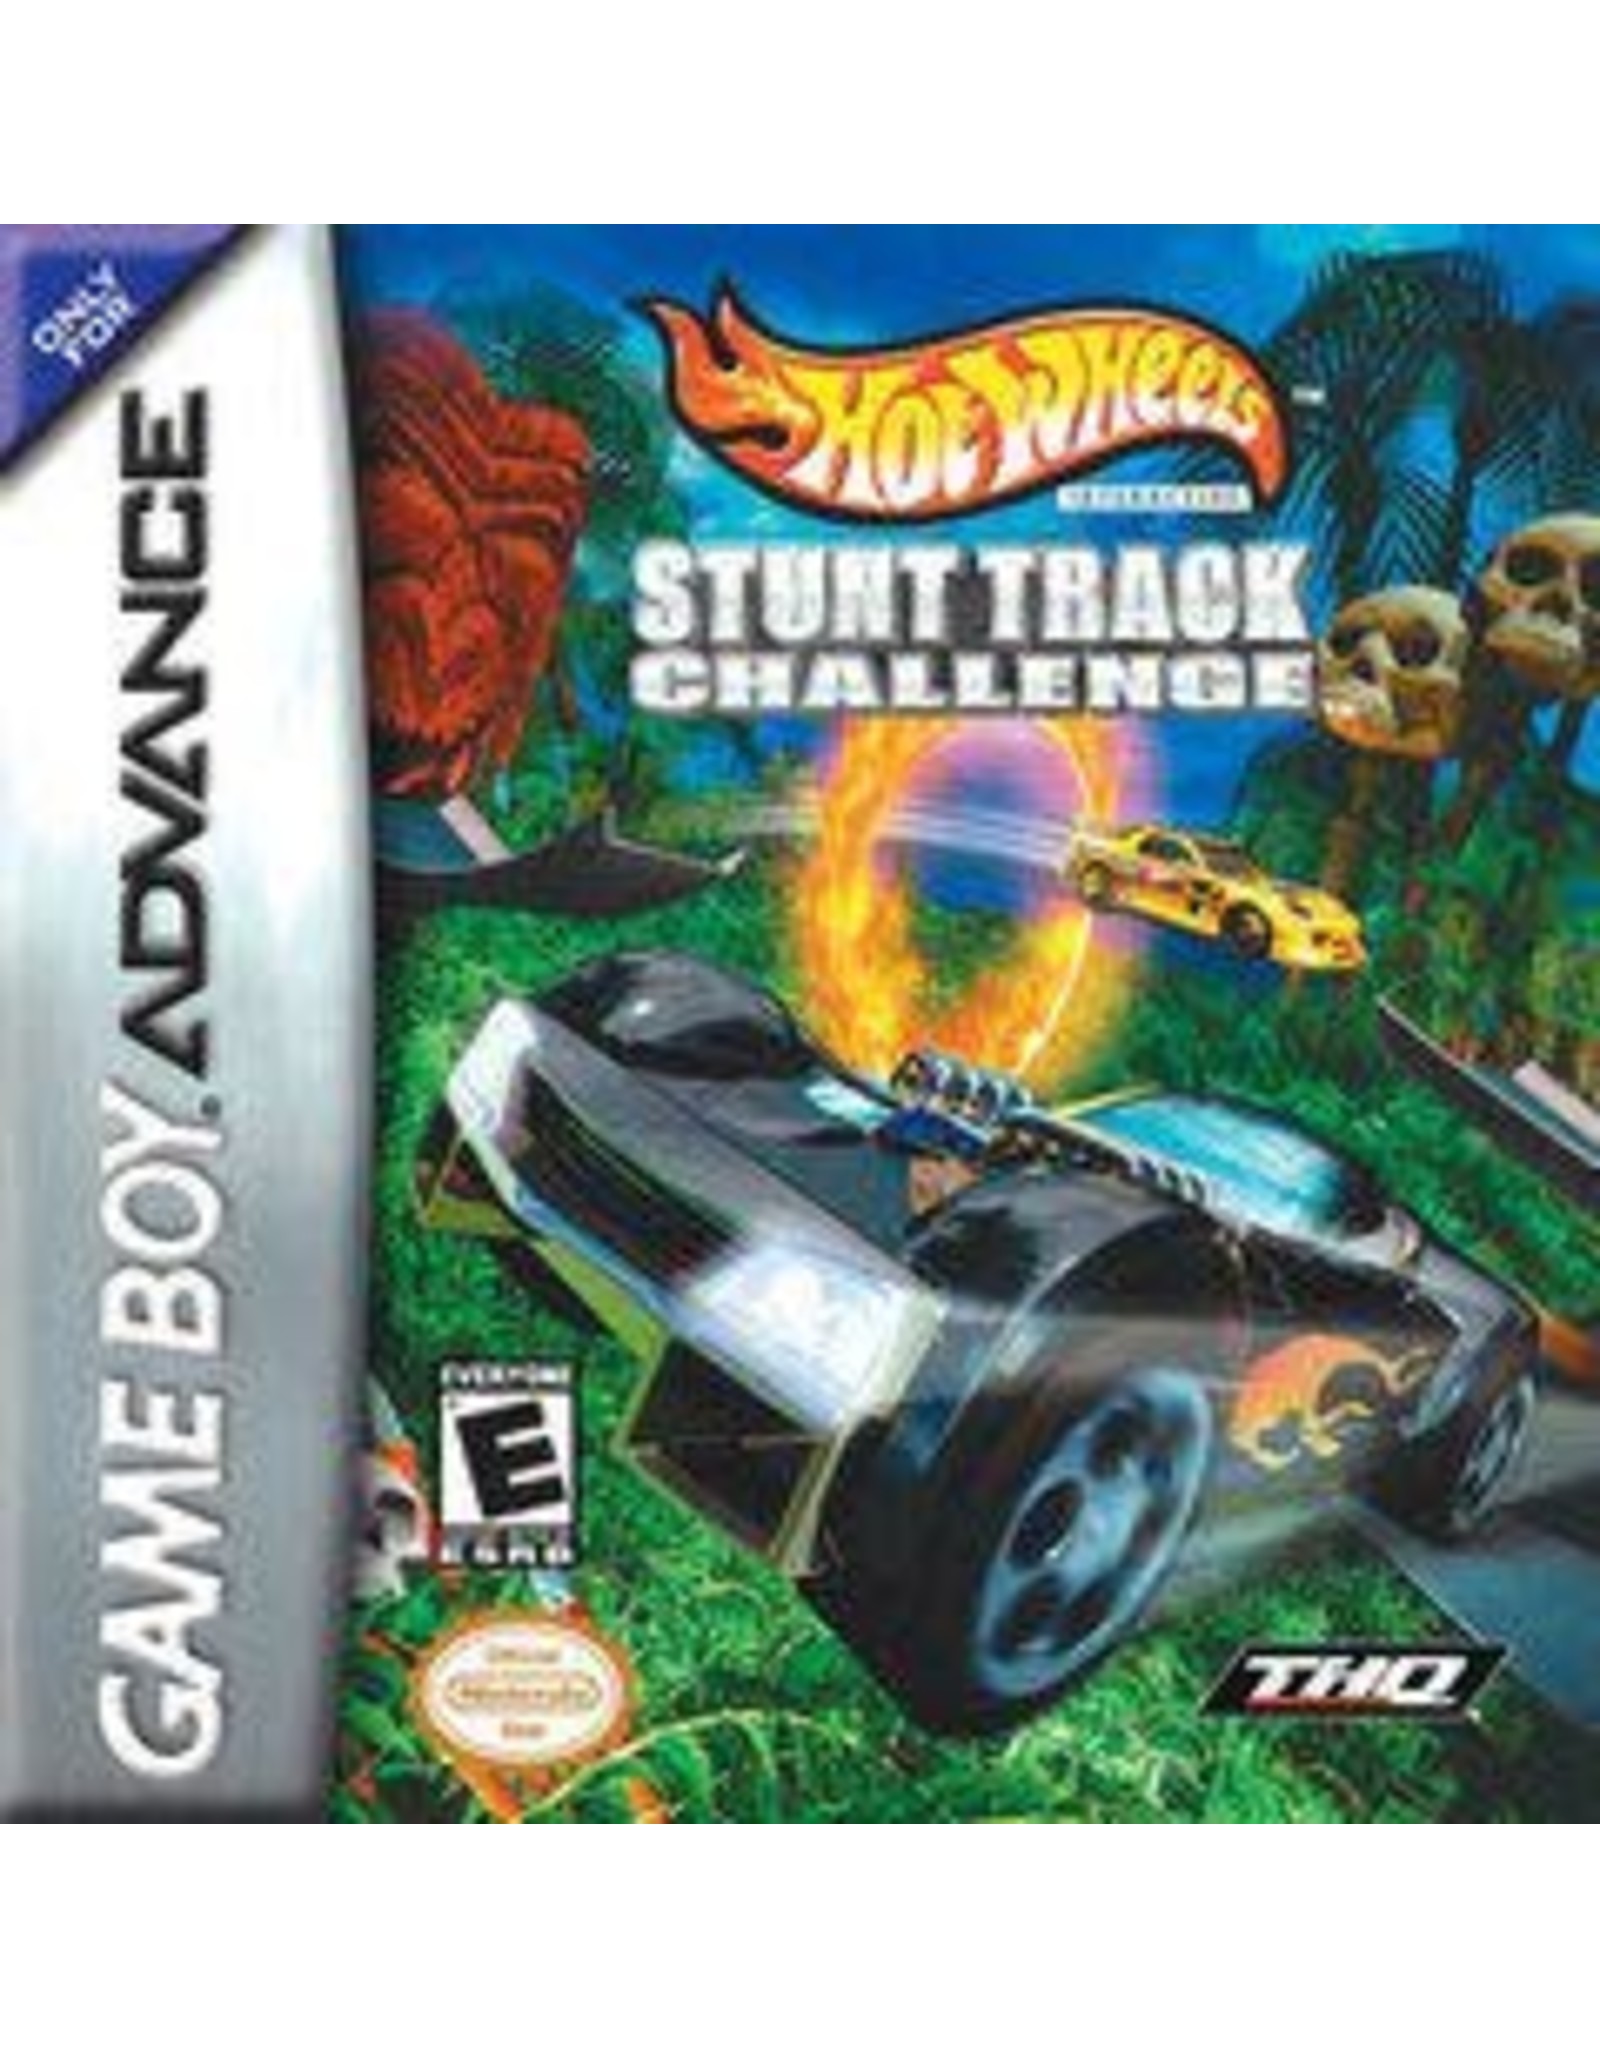 Game Boy Advance Hot Wheels Stunt Track Challenge (Cart Only)